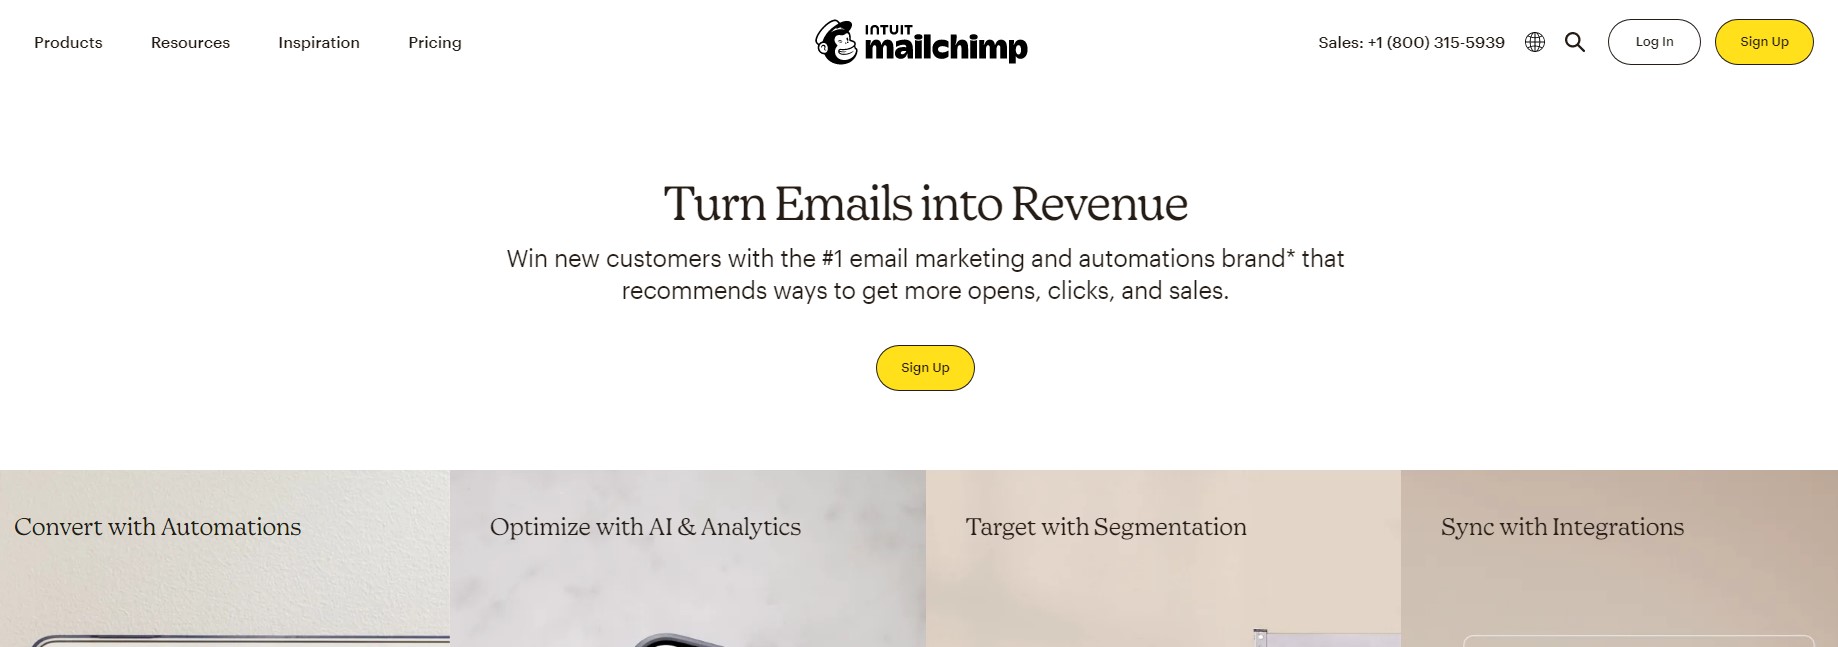 mailchimp email templates